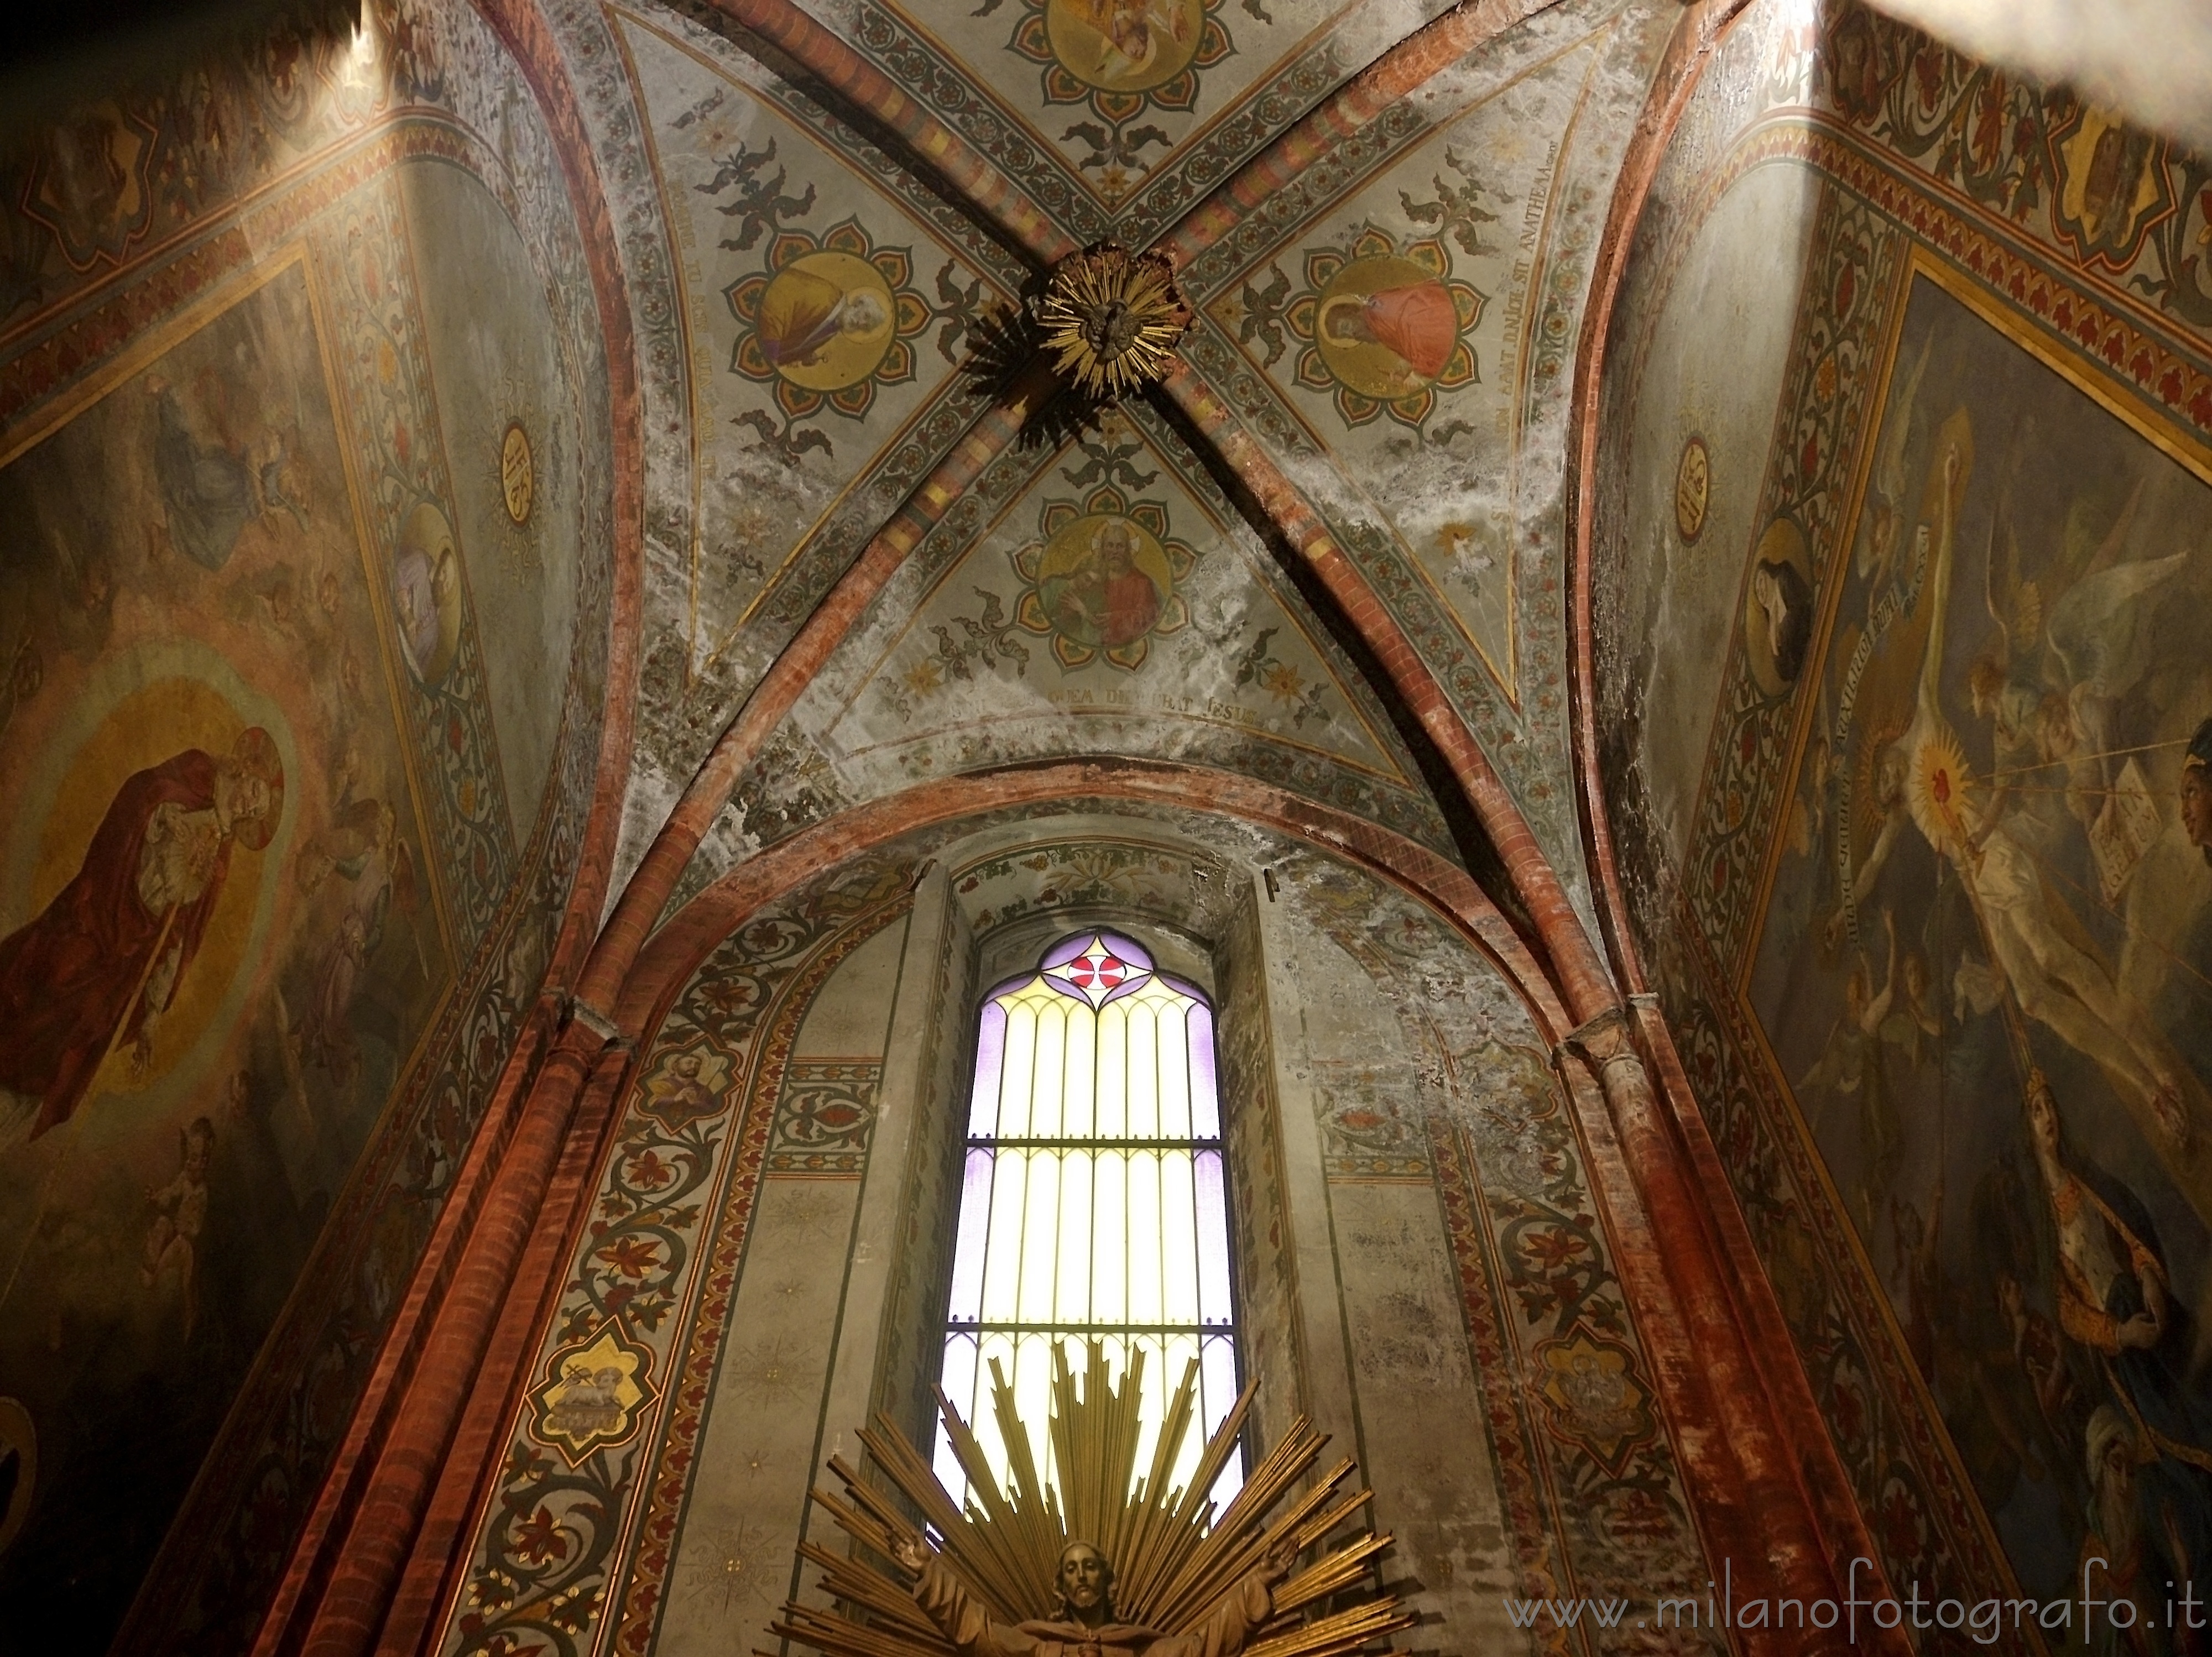 Pavia (Italy): One of the lateral chapels of the Church of Santa Maria del Carmine - Pavia (Italy)